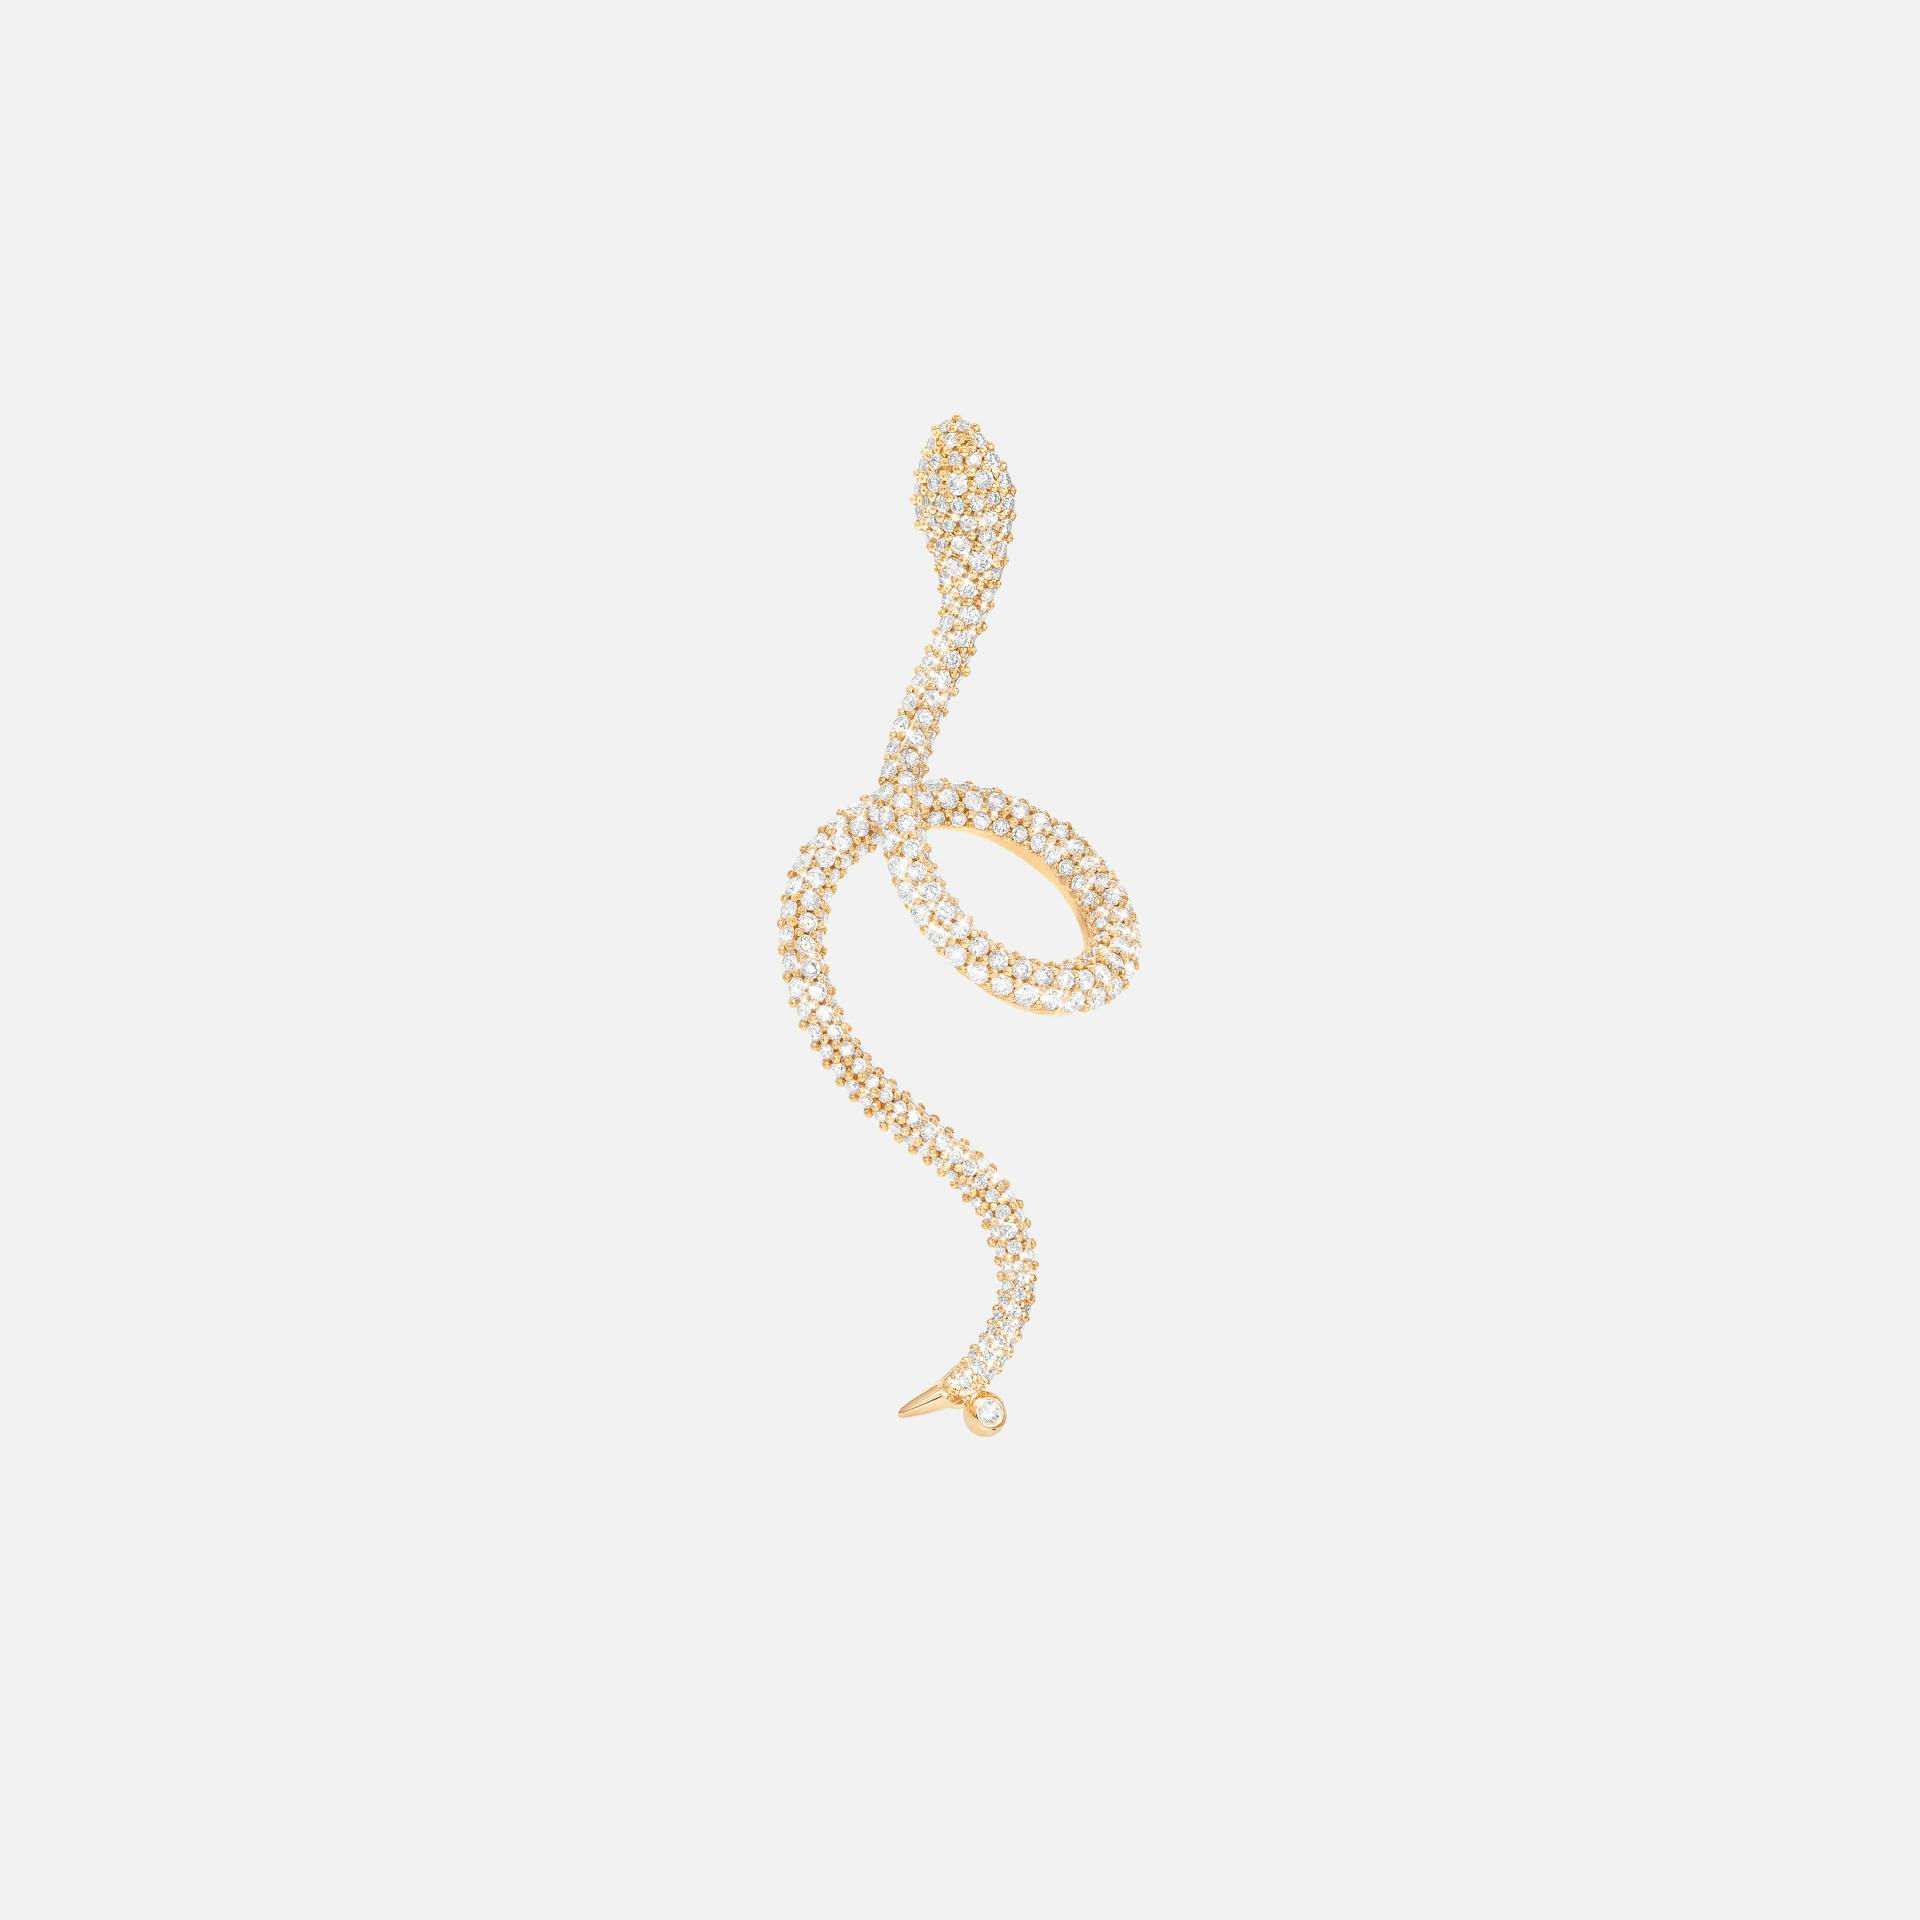 Snakes Earring in Yellow Gold with Pavé-set Diamonds  |  Ole Lynggaard Copenhagen 